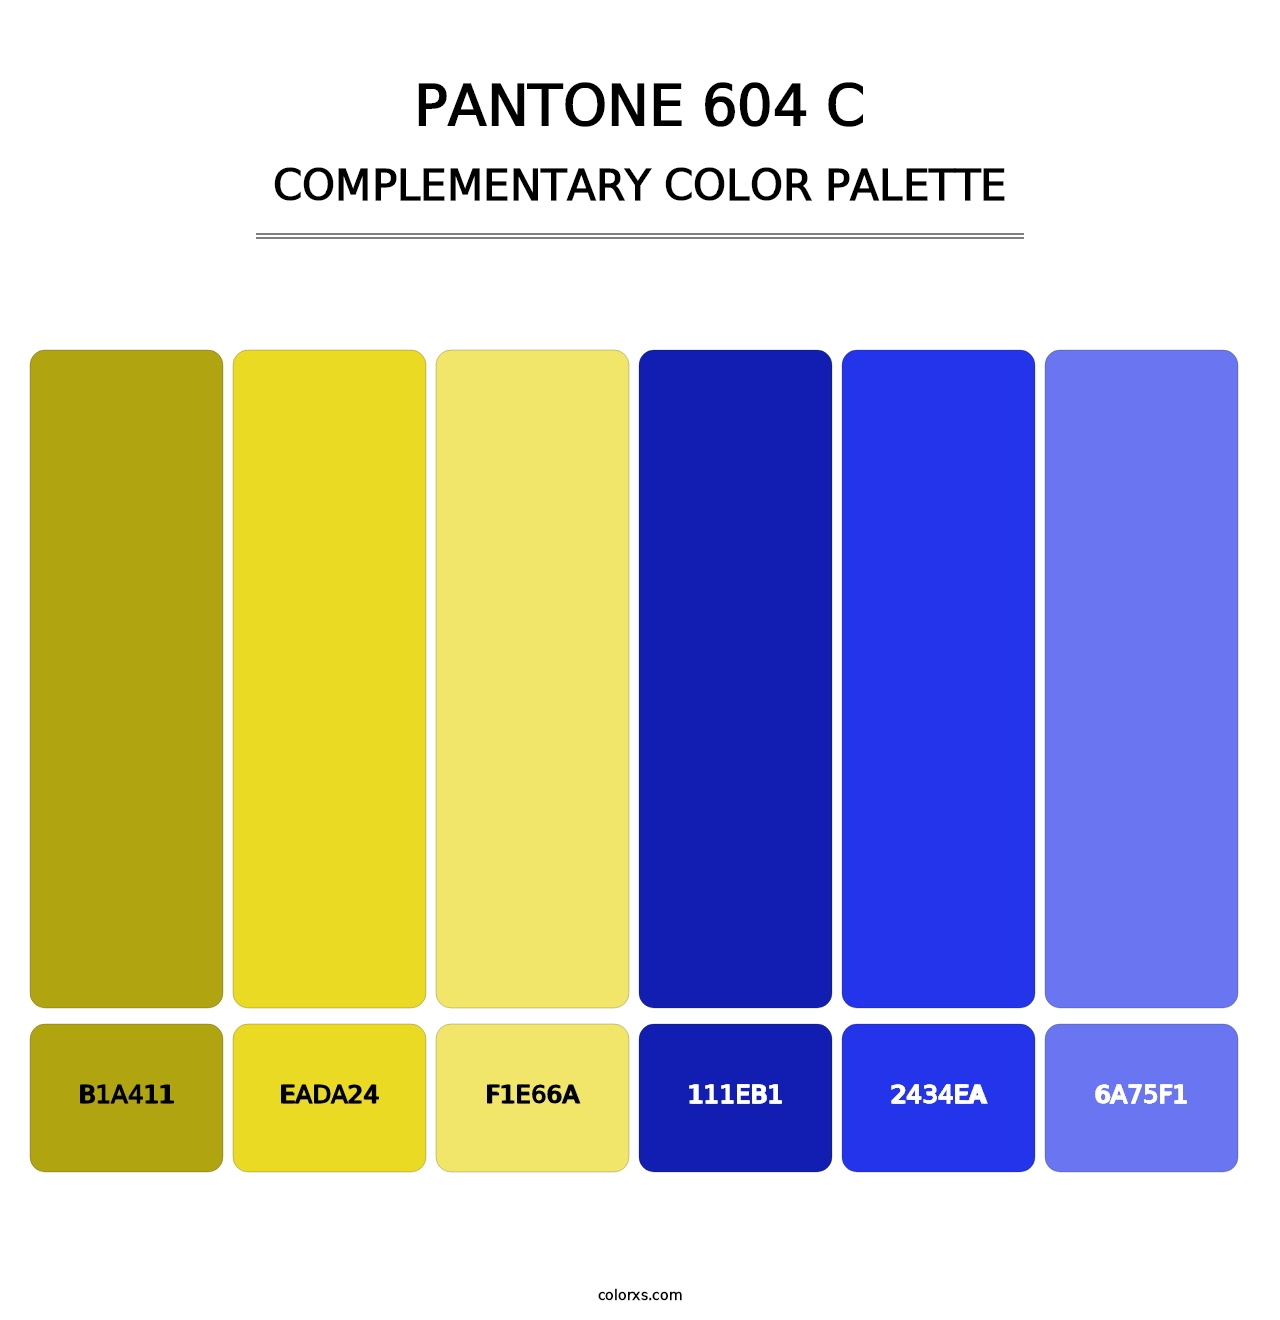 PANTONE 604 C - Complementary Color Palette